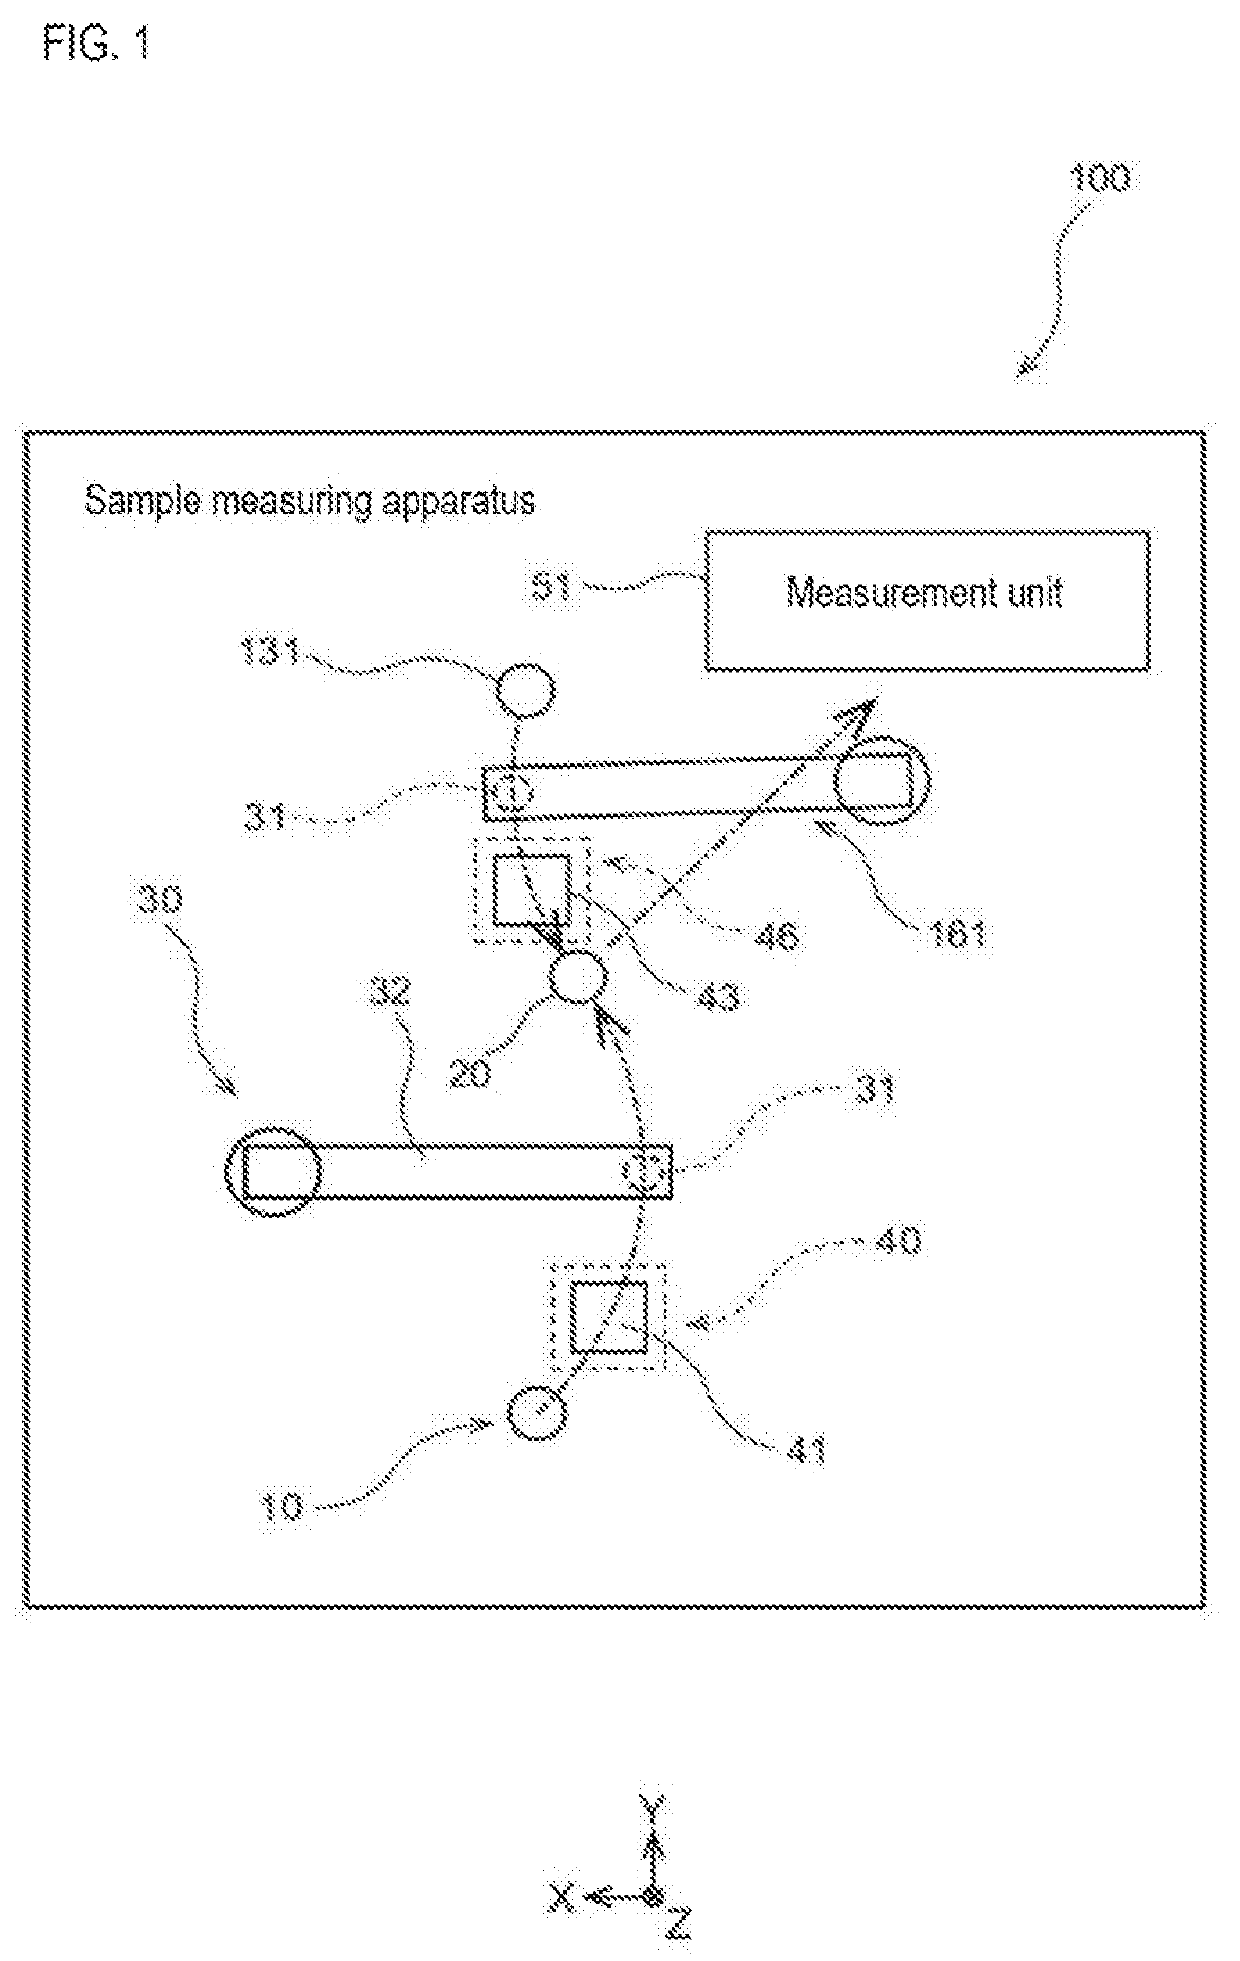 Sample measuring apparatus and sample measuring method